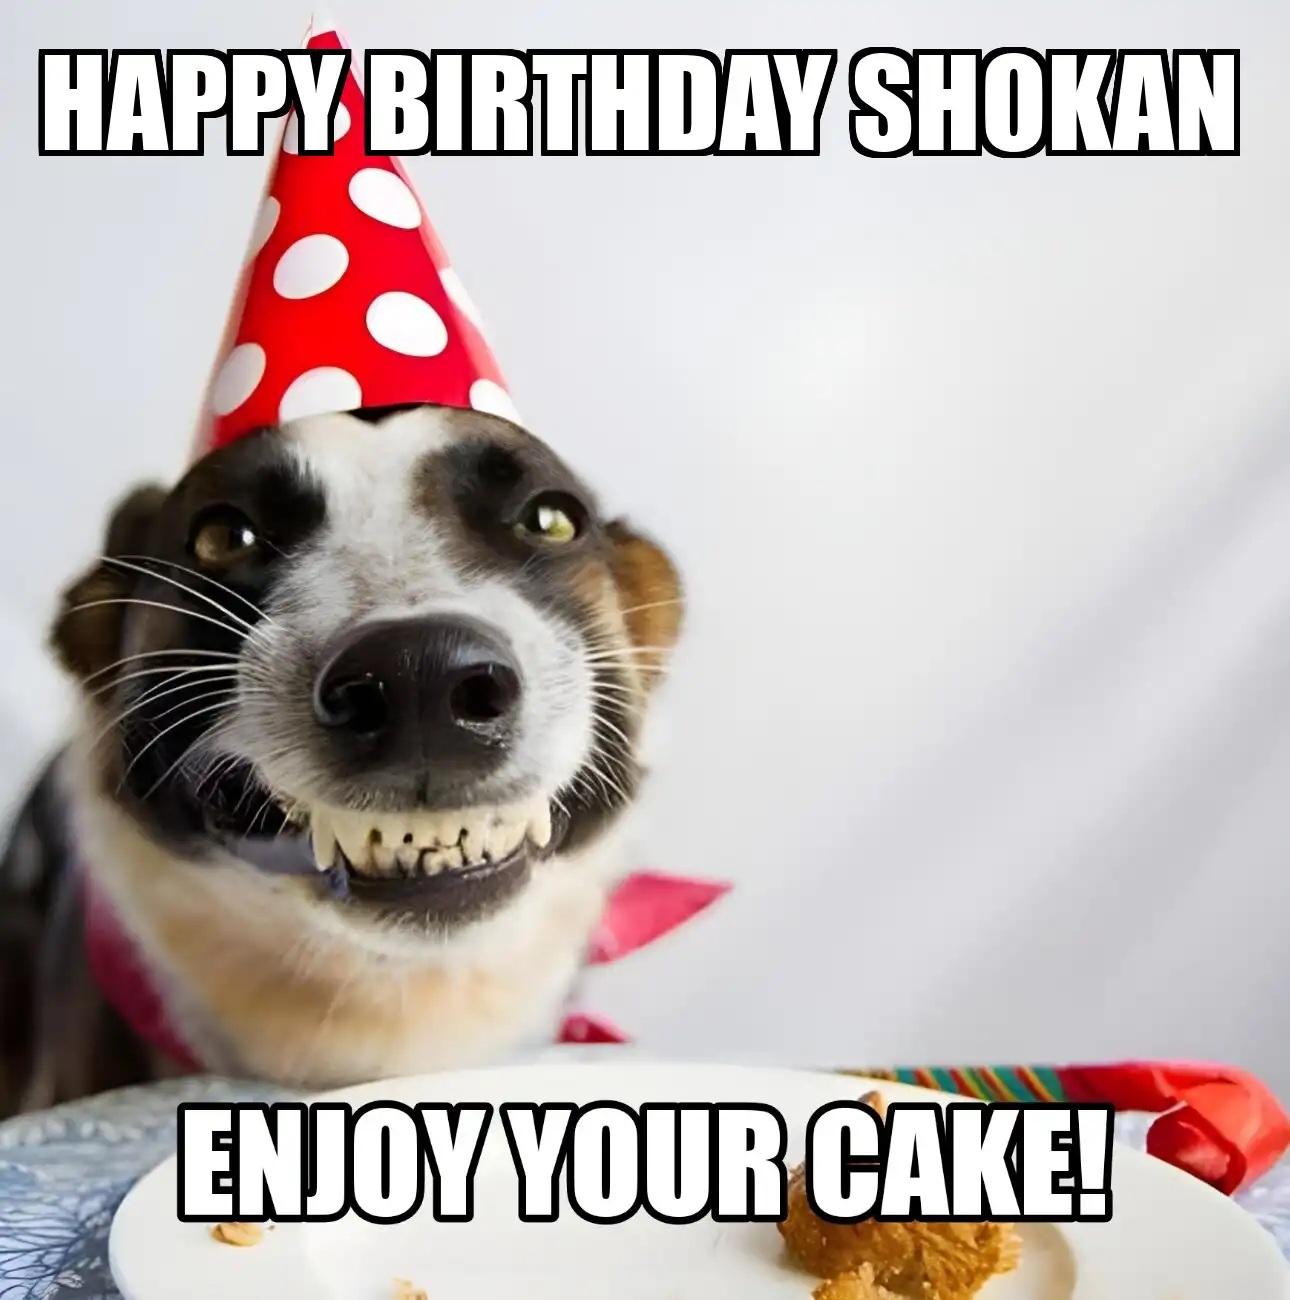 Happy Birthday Shokan Enjoy Your Cake Dog Meme